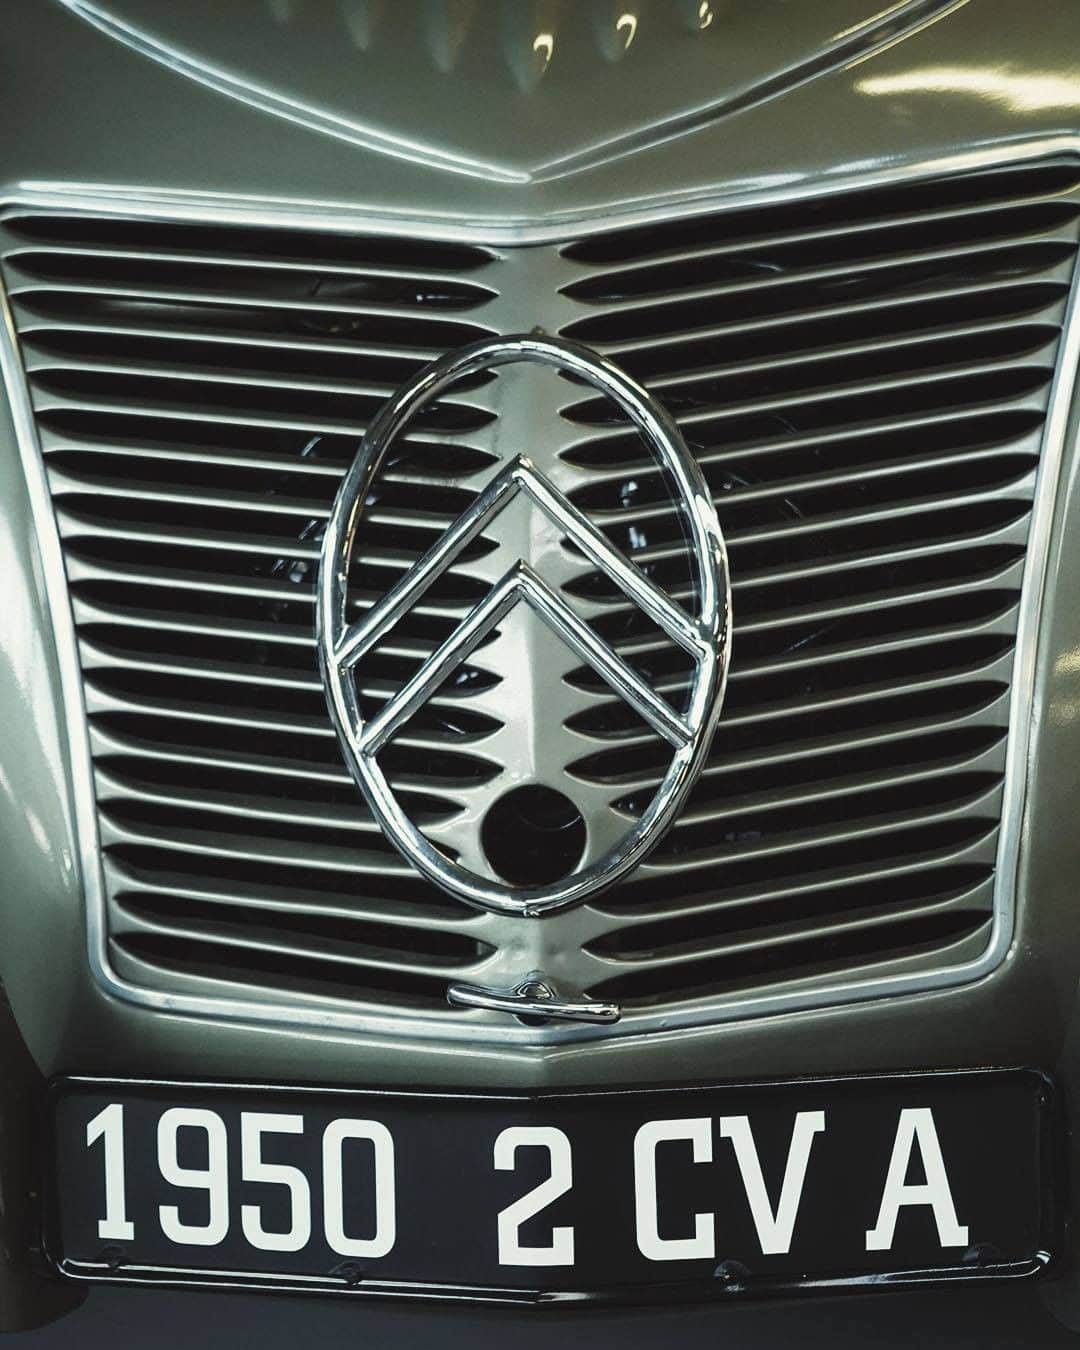 Citroënのインスタグラム